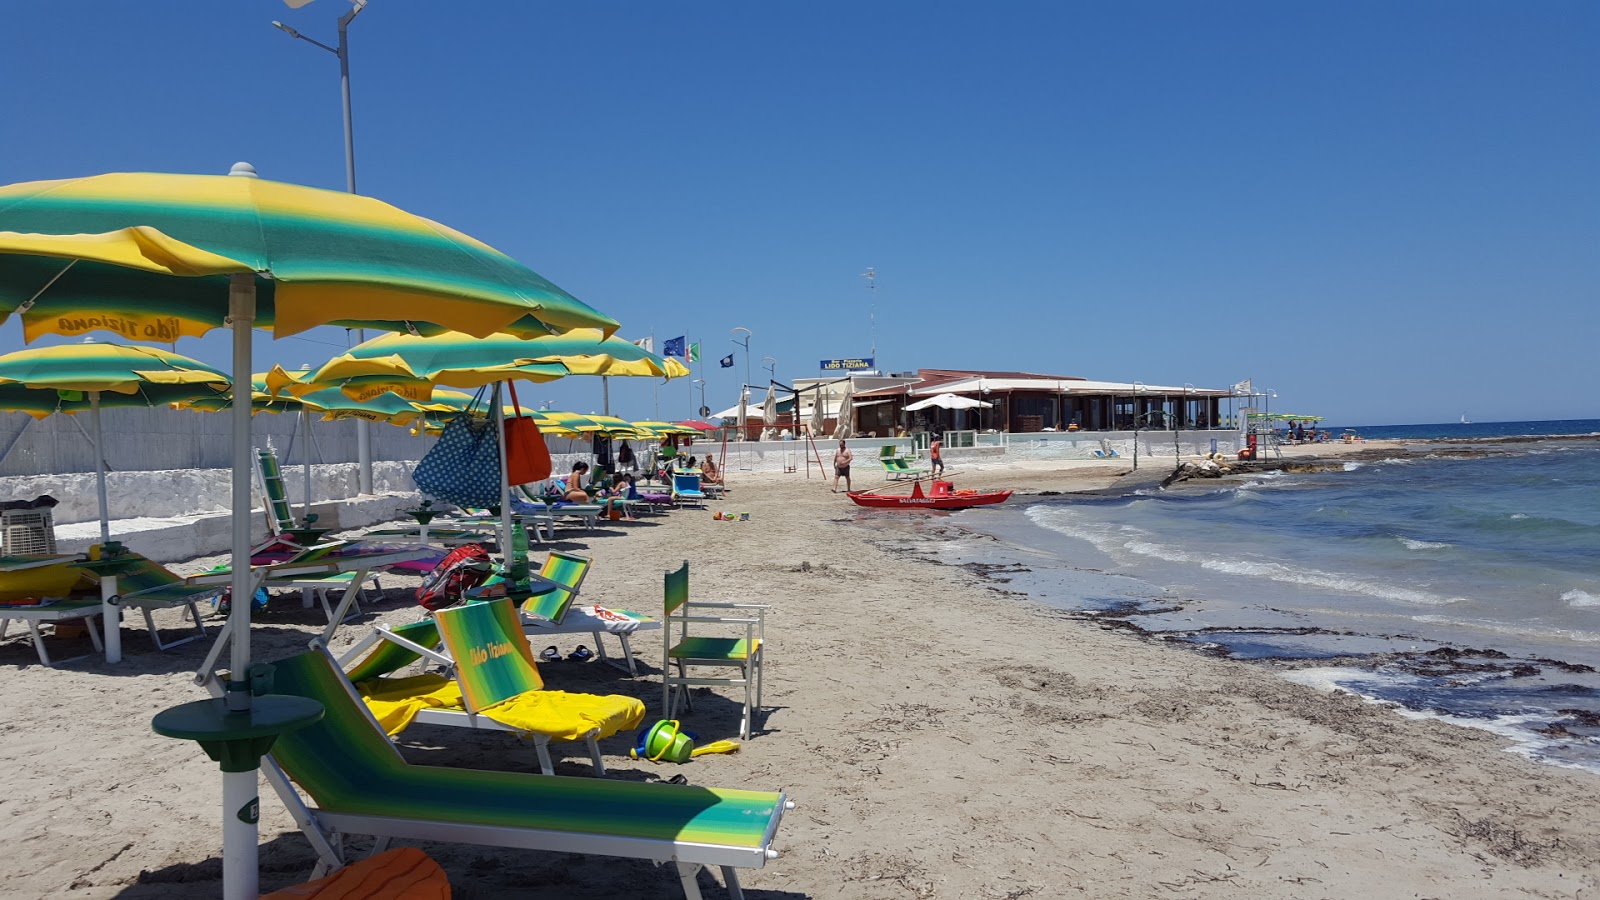 Foto von Spiaggia di Specchiolla mit heller sand Oberfläche